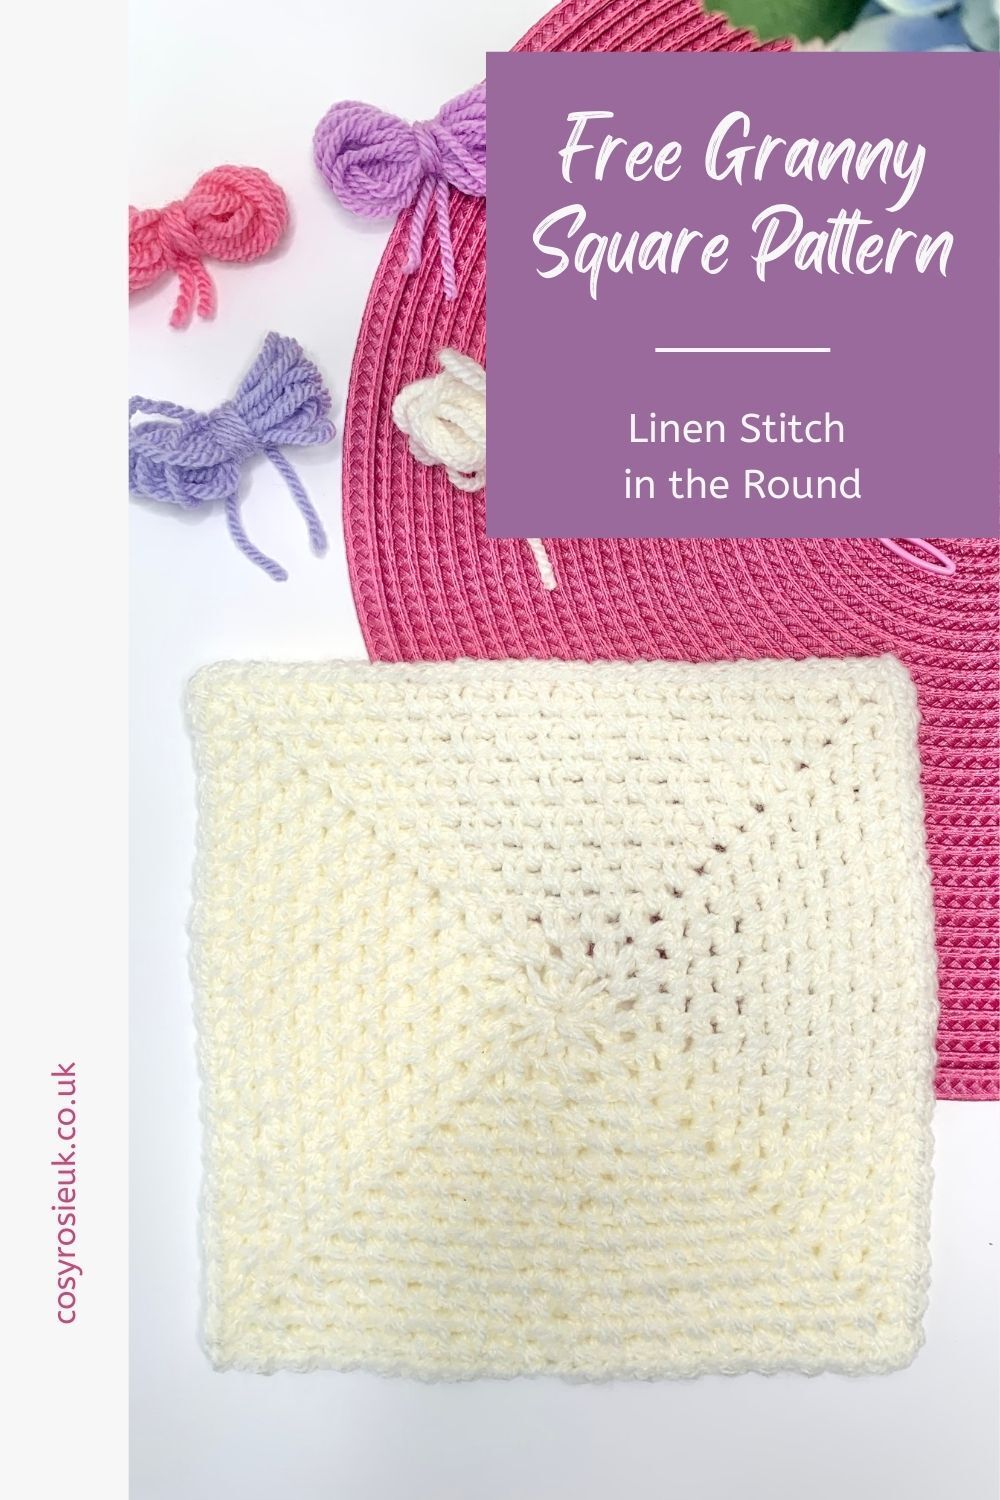 Linen stitch in the round granny square pattern